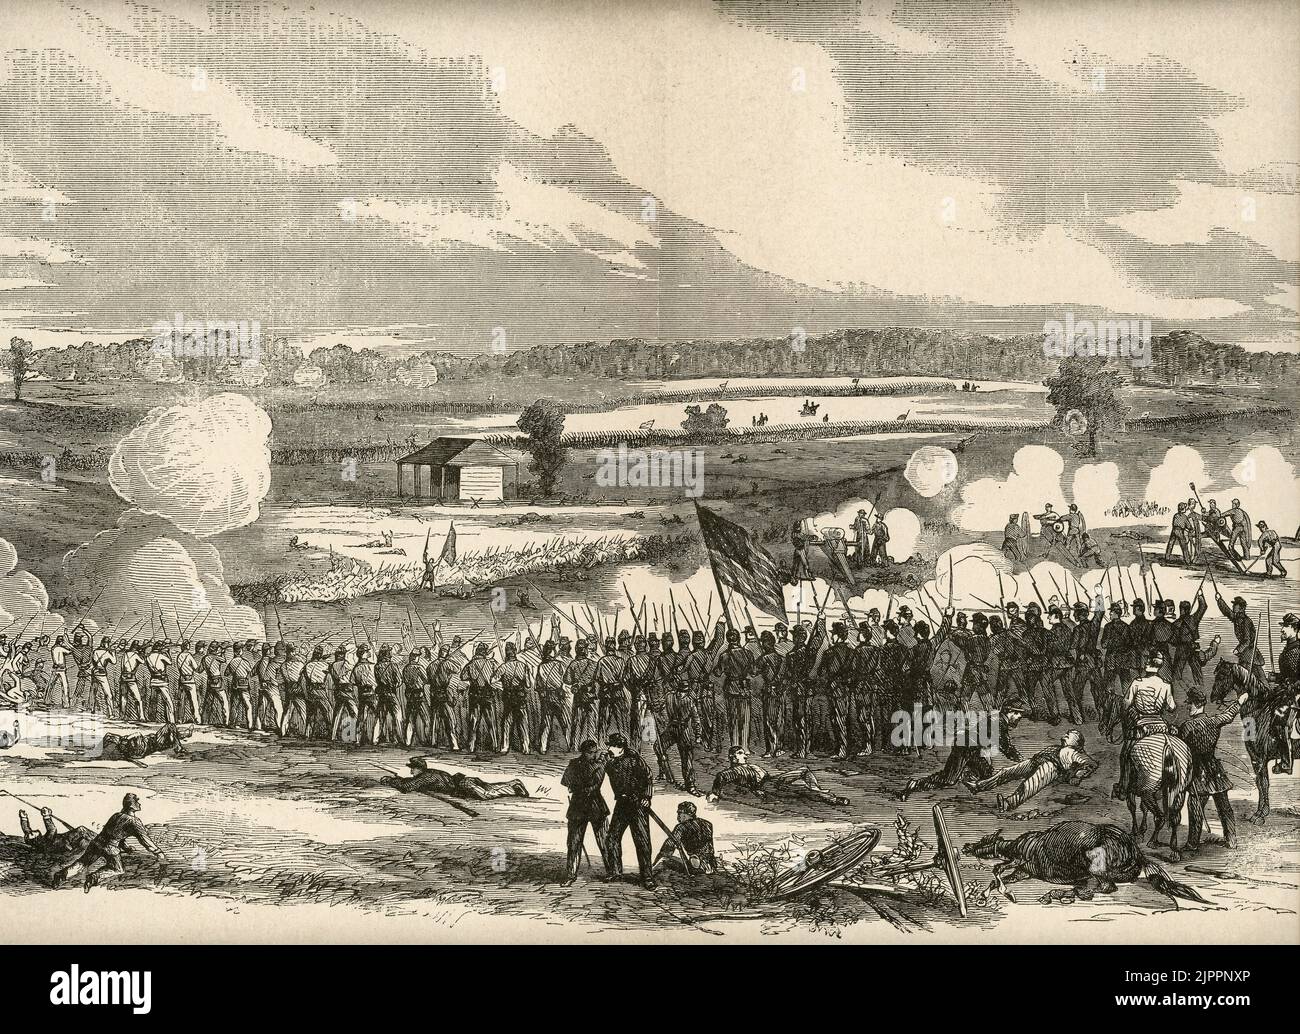 La Batalla de Perryville, Kentucky durante la Guerra Civil Americana, luchó el 8 de octubre de 1862 Foto de stock